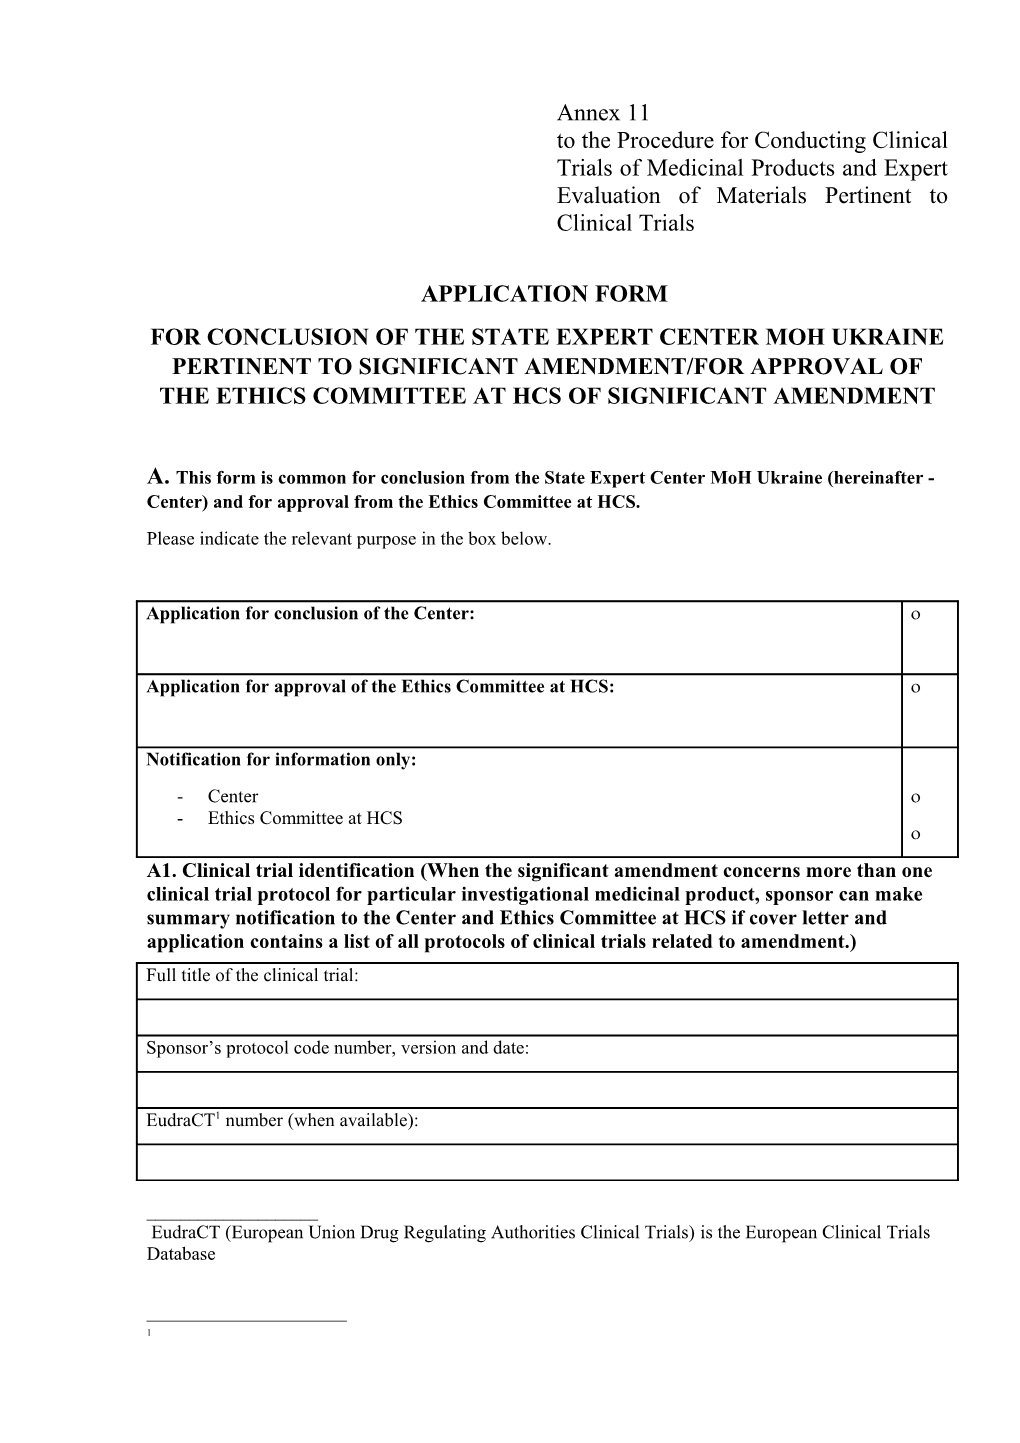 Annex 11 - CTA Form